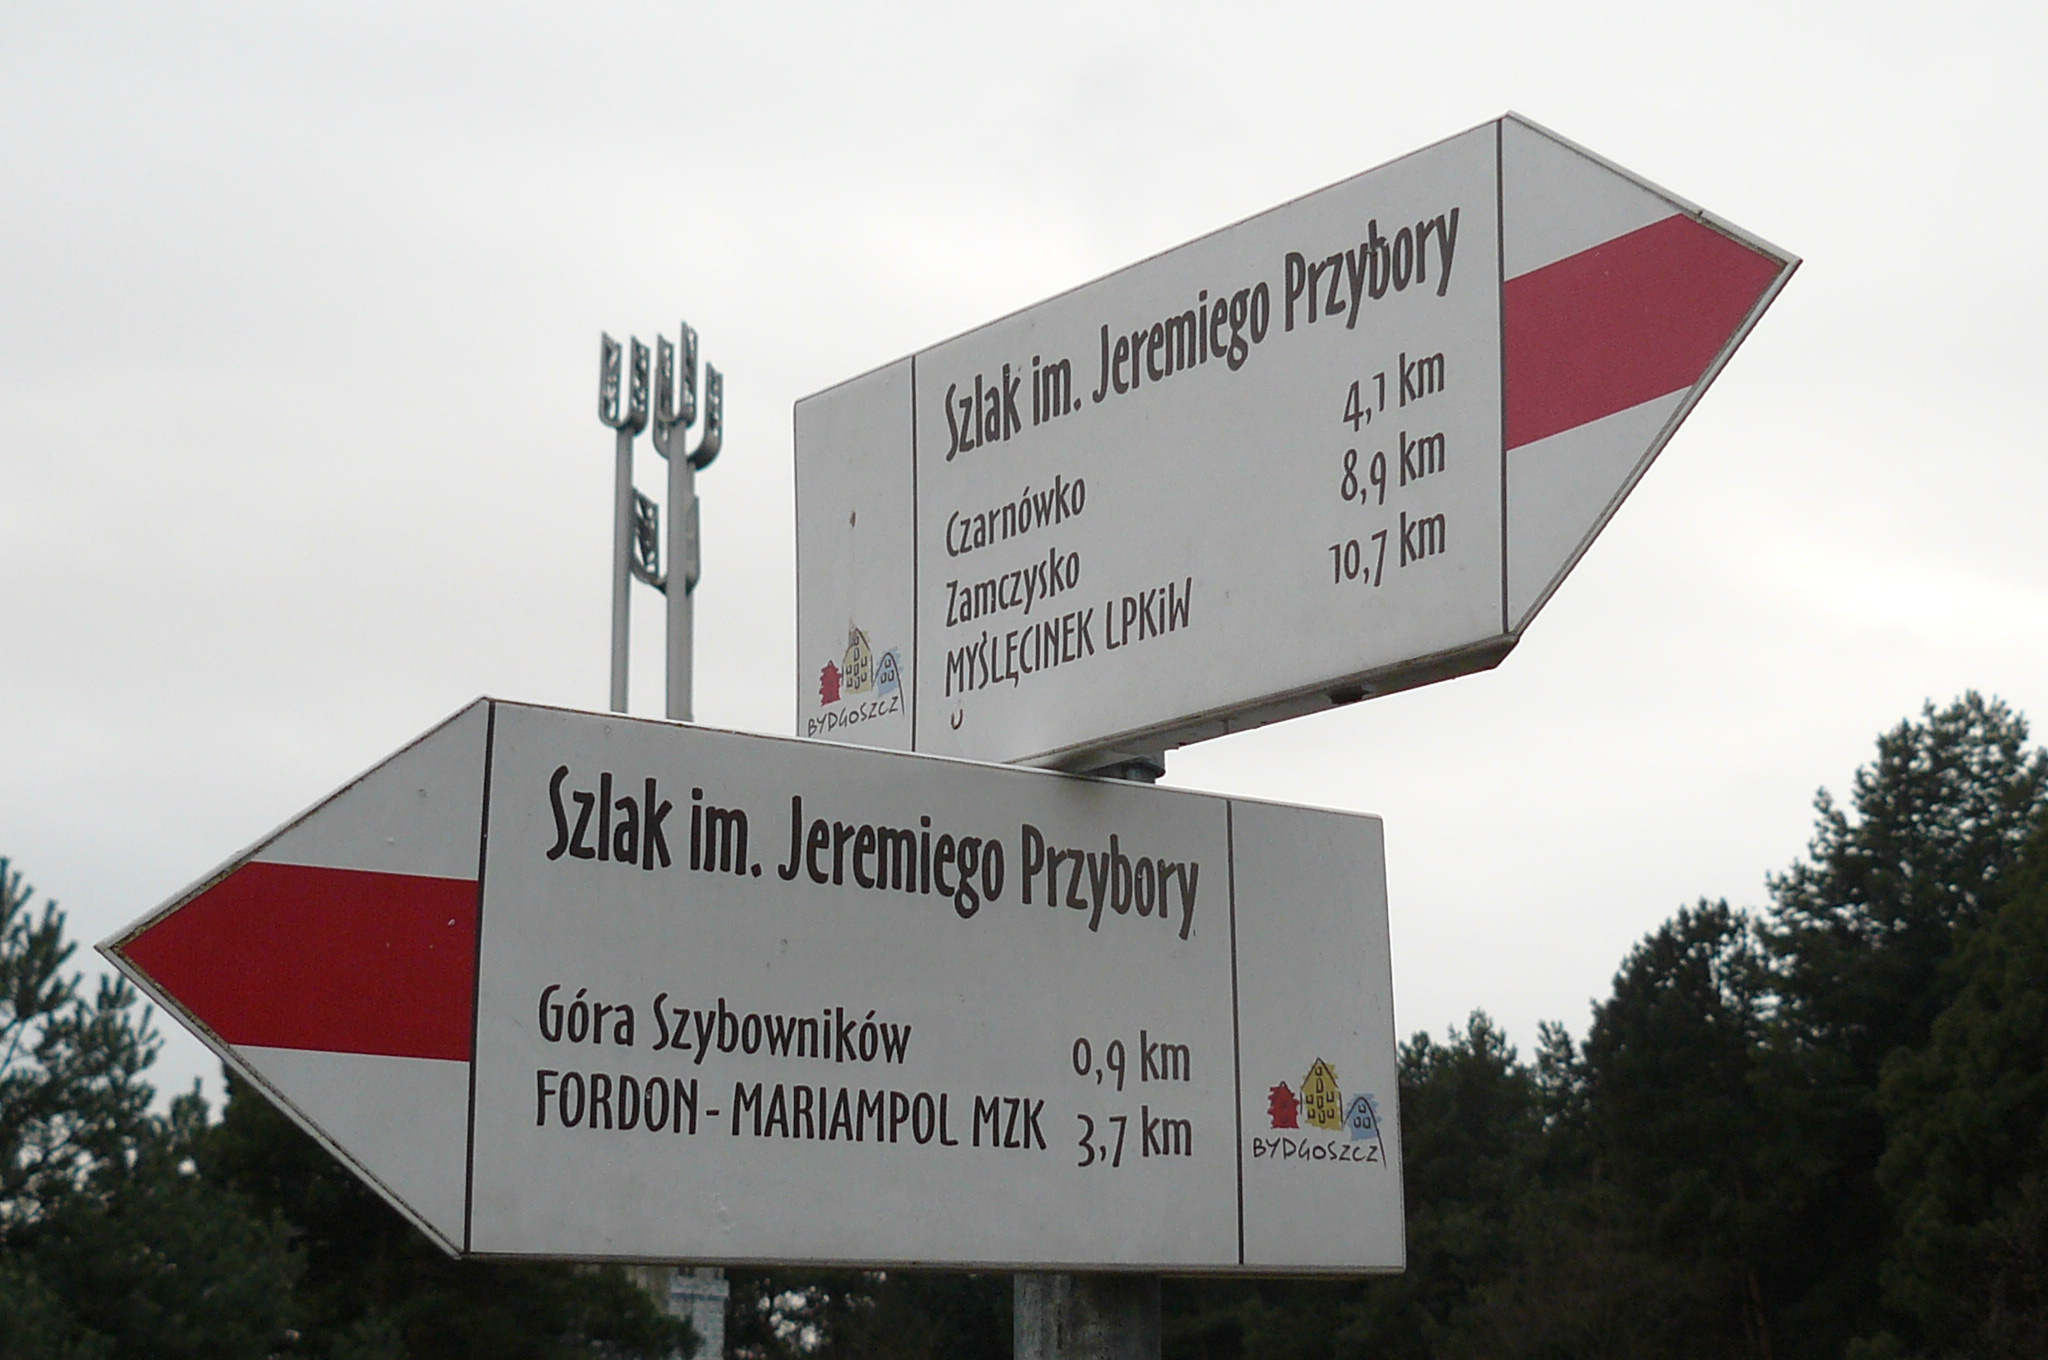 Wikipedia, Fordon (Bydgoszcz), Hiking and footpath signs in Poland, Jeremi Przybora, Self-published 